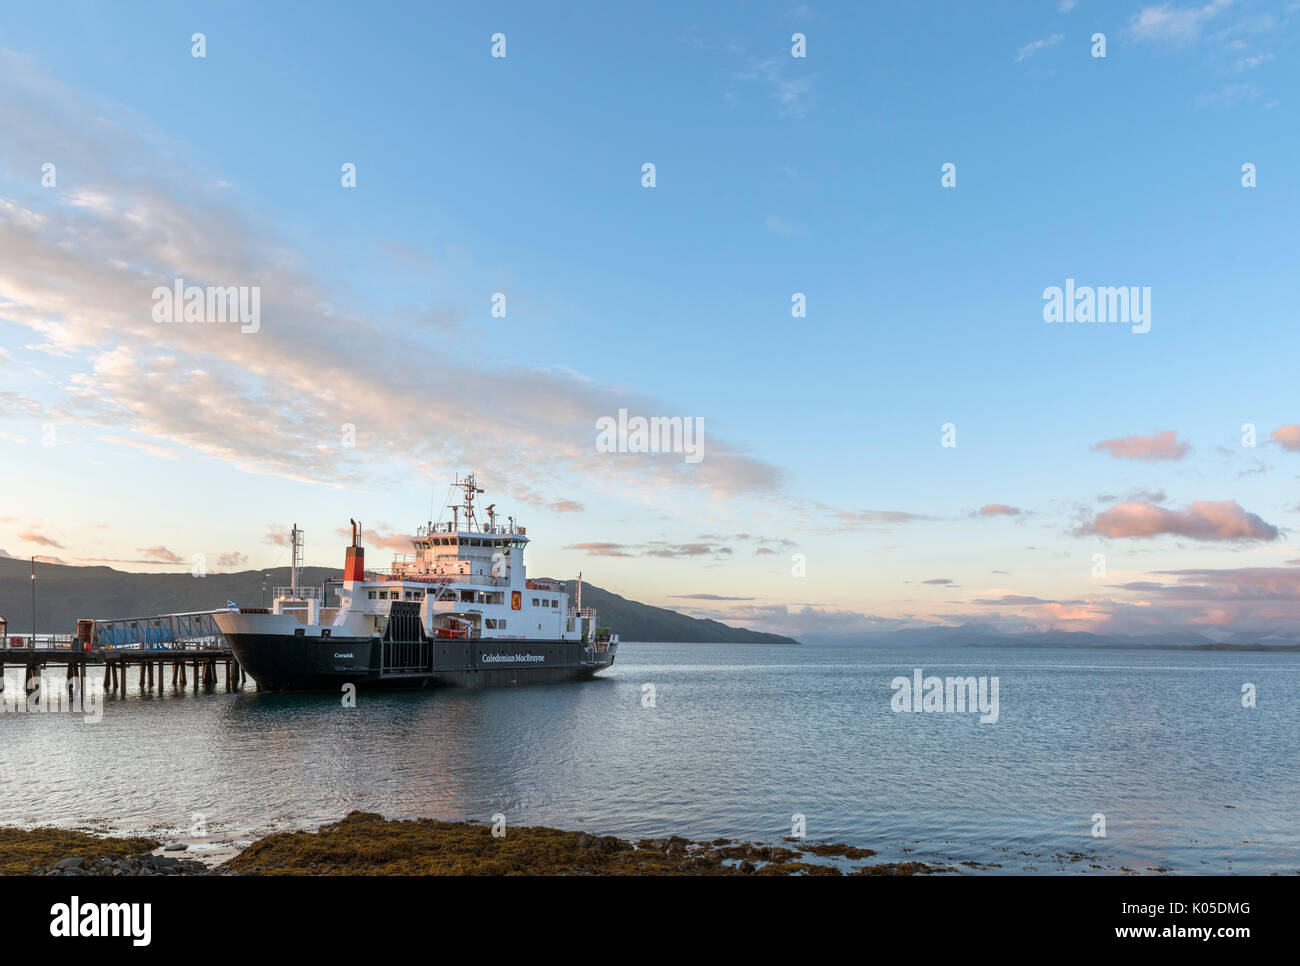 Caledonian MacBrayne (calmac) Fähre bei Sonnenuntergang, Craignure, Isle of Mull, Argyll und Bute, Schottland, Großbritannien Stockfoto